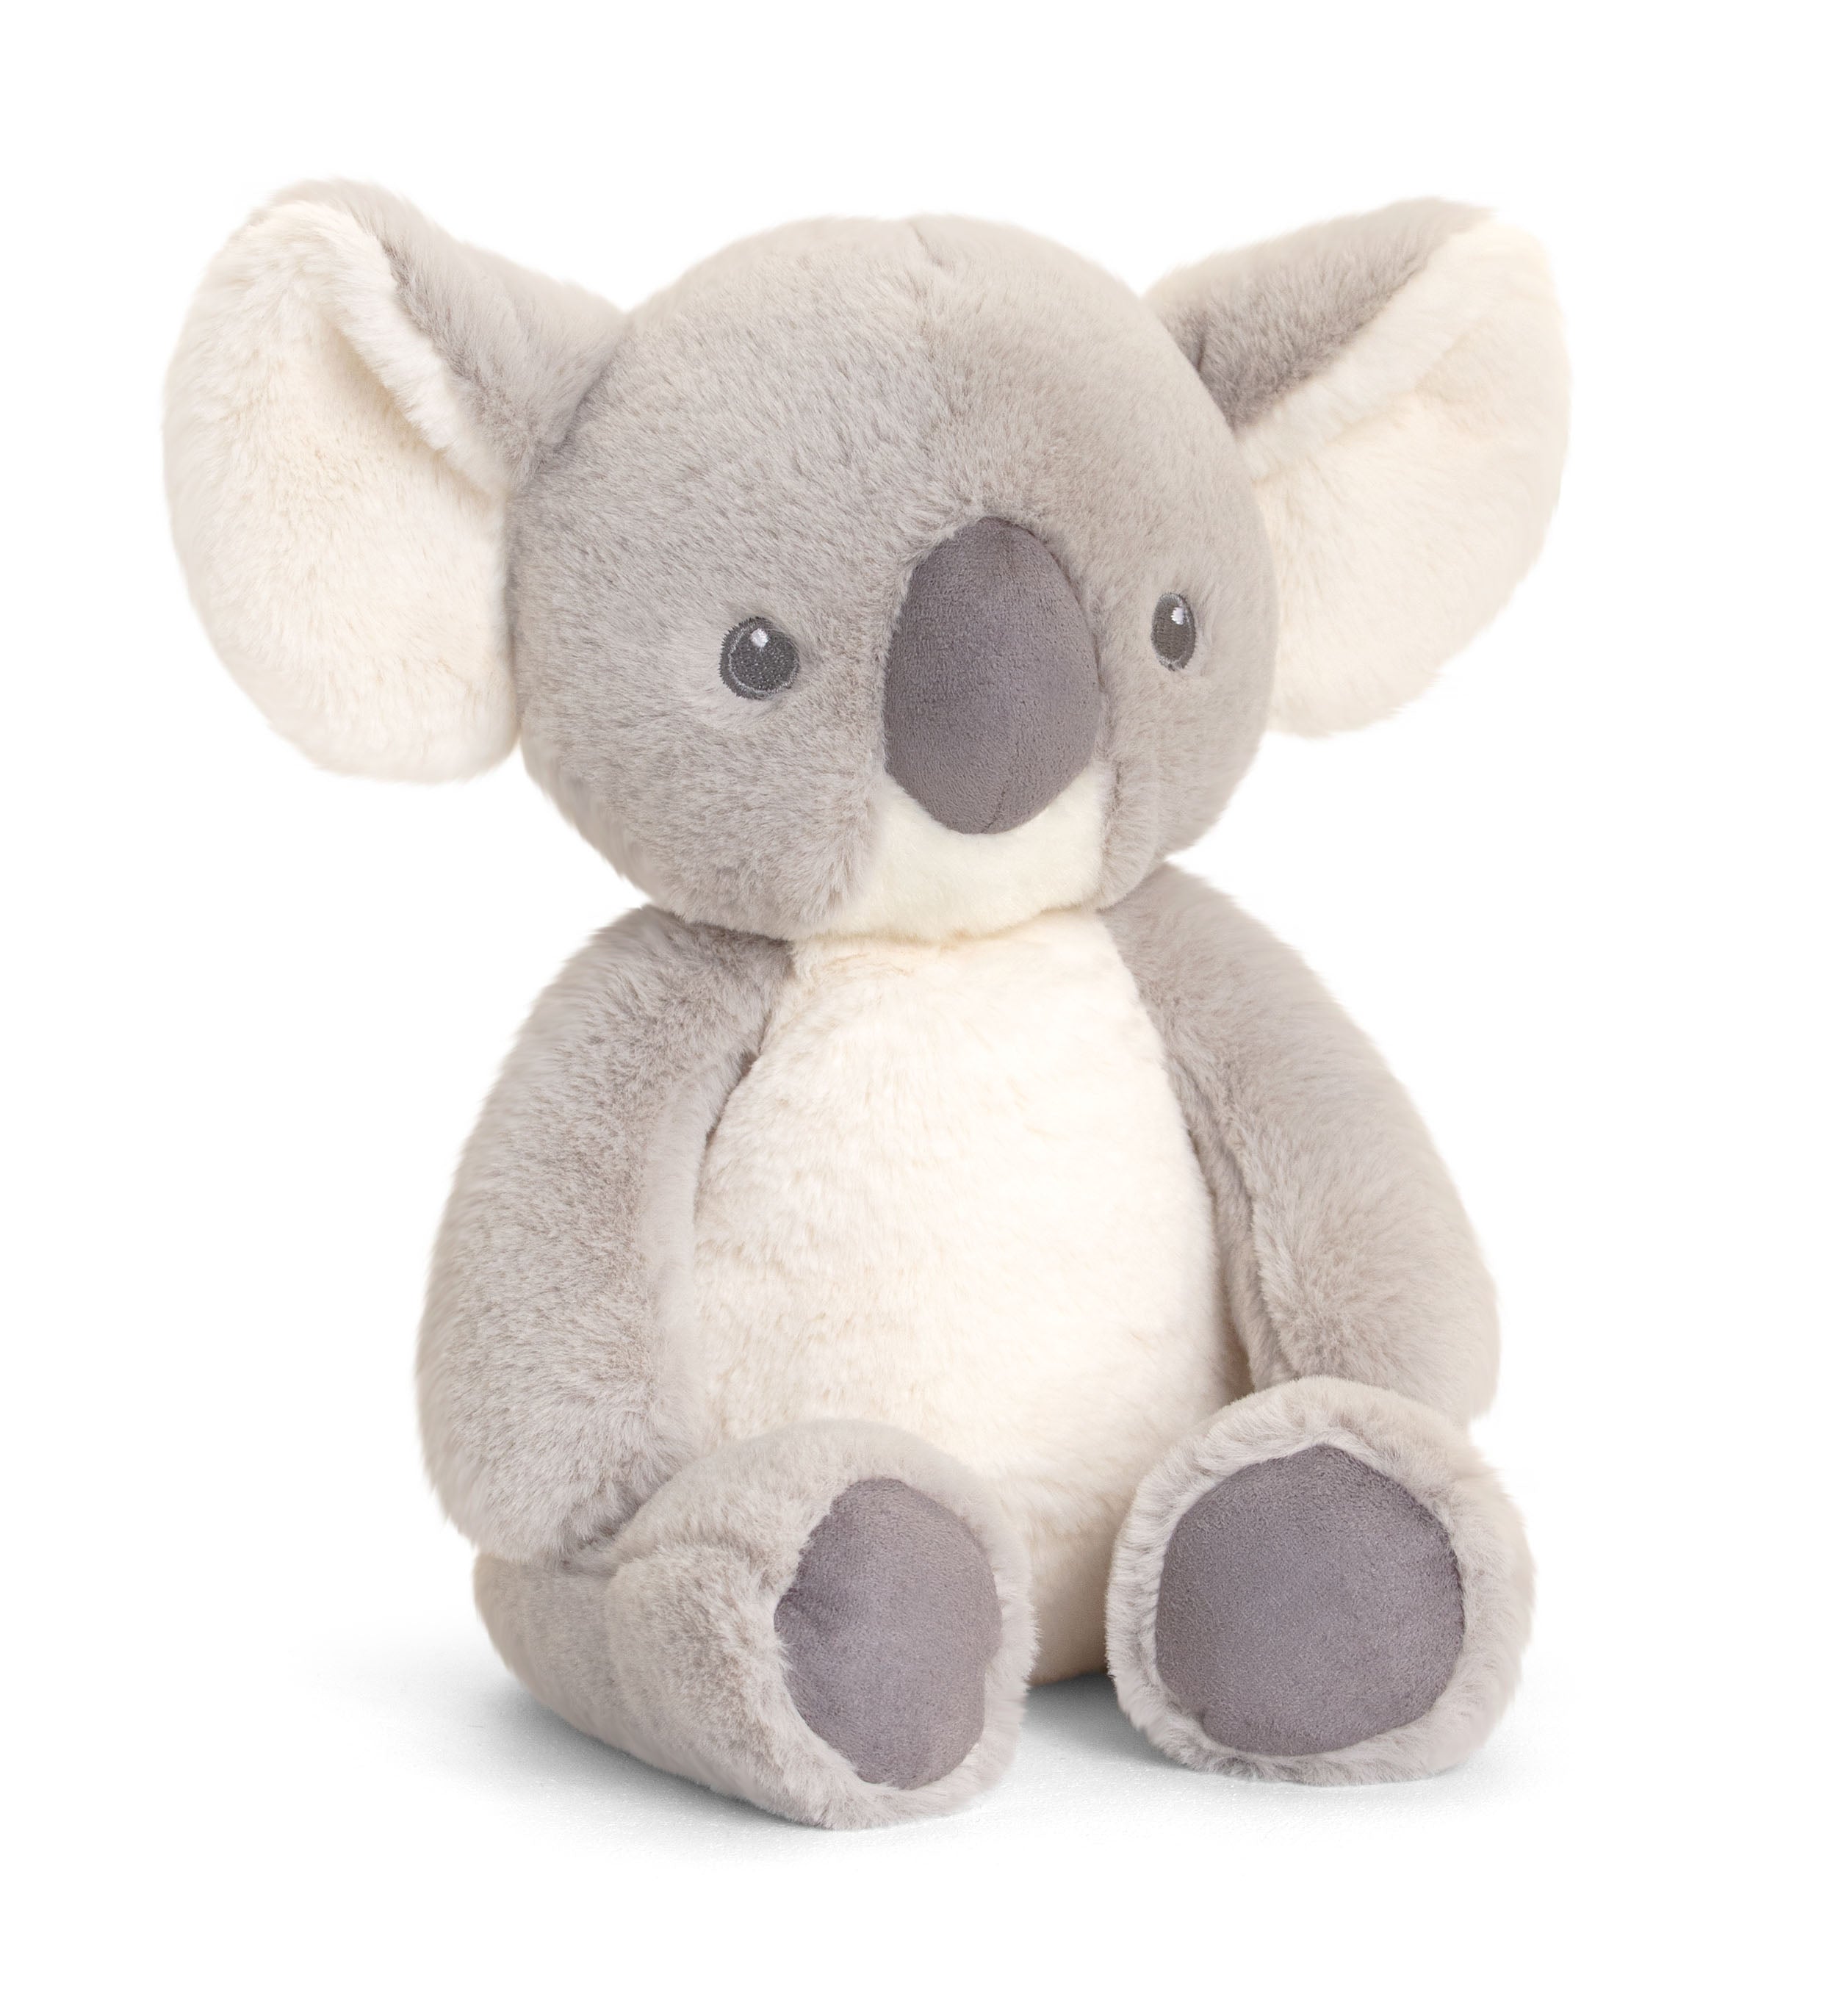 Cozy Koala Soft Toy - Keel Toys - 25cm